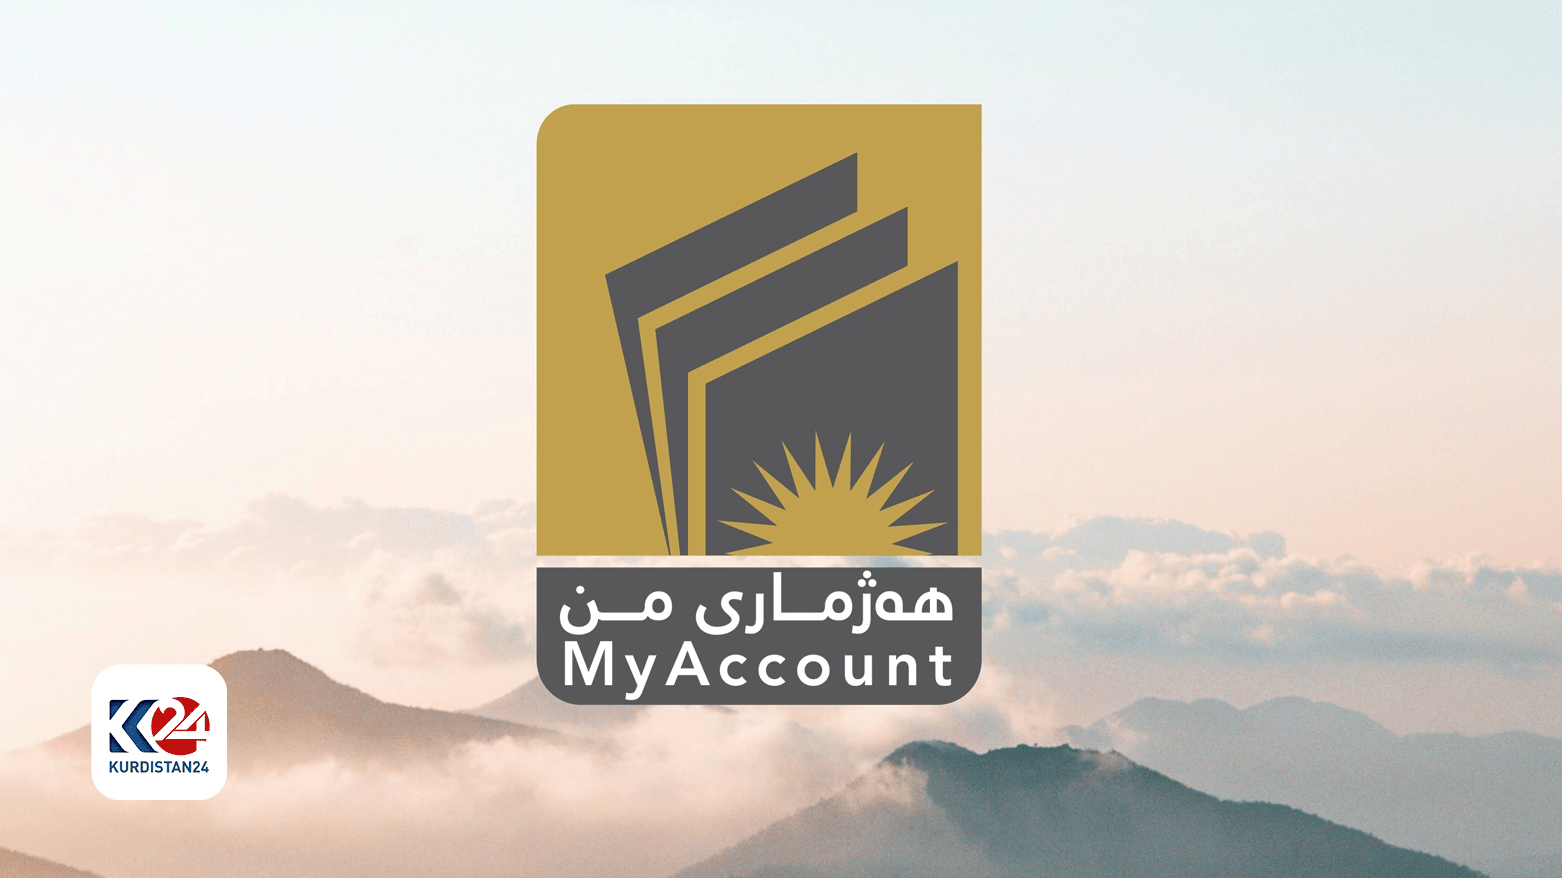  civil servants registered to MyAccount thus far